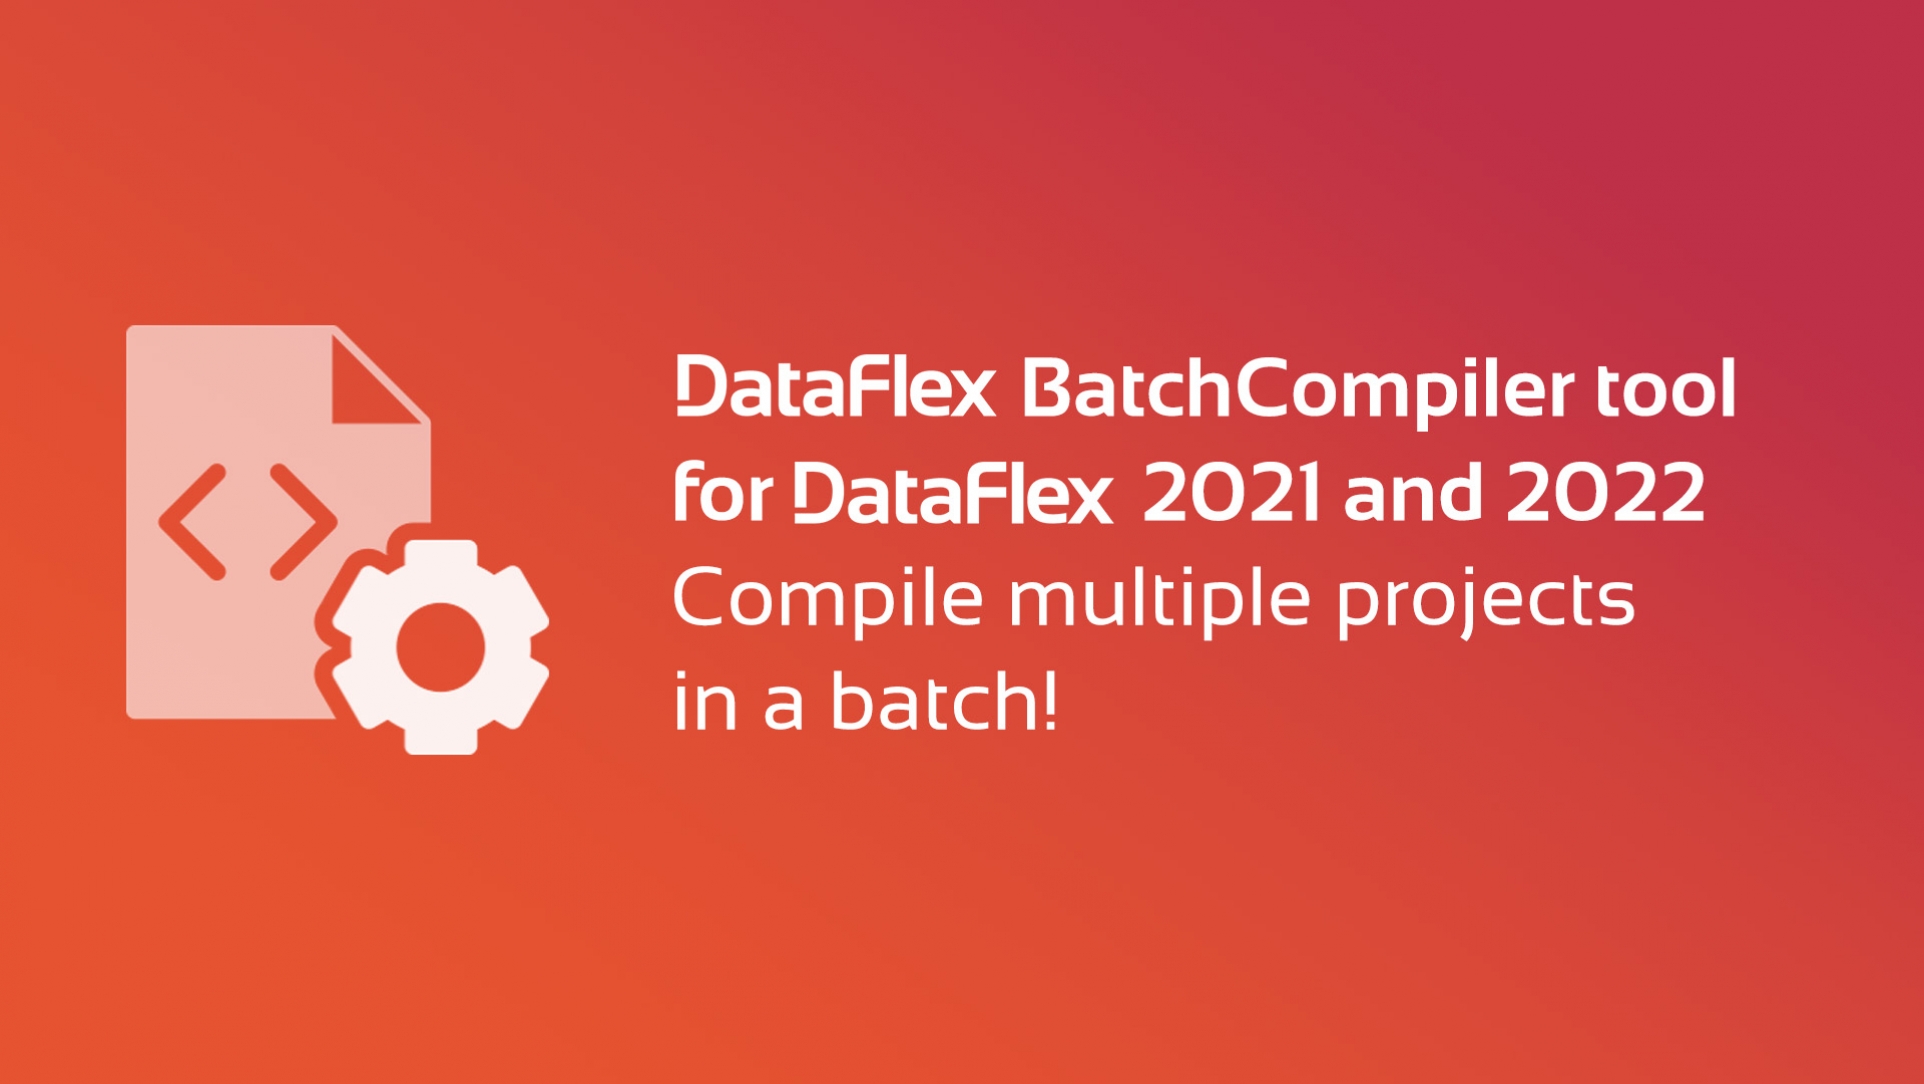 Free DataFlex BatchCompiler tool